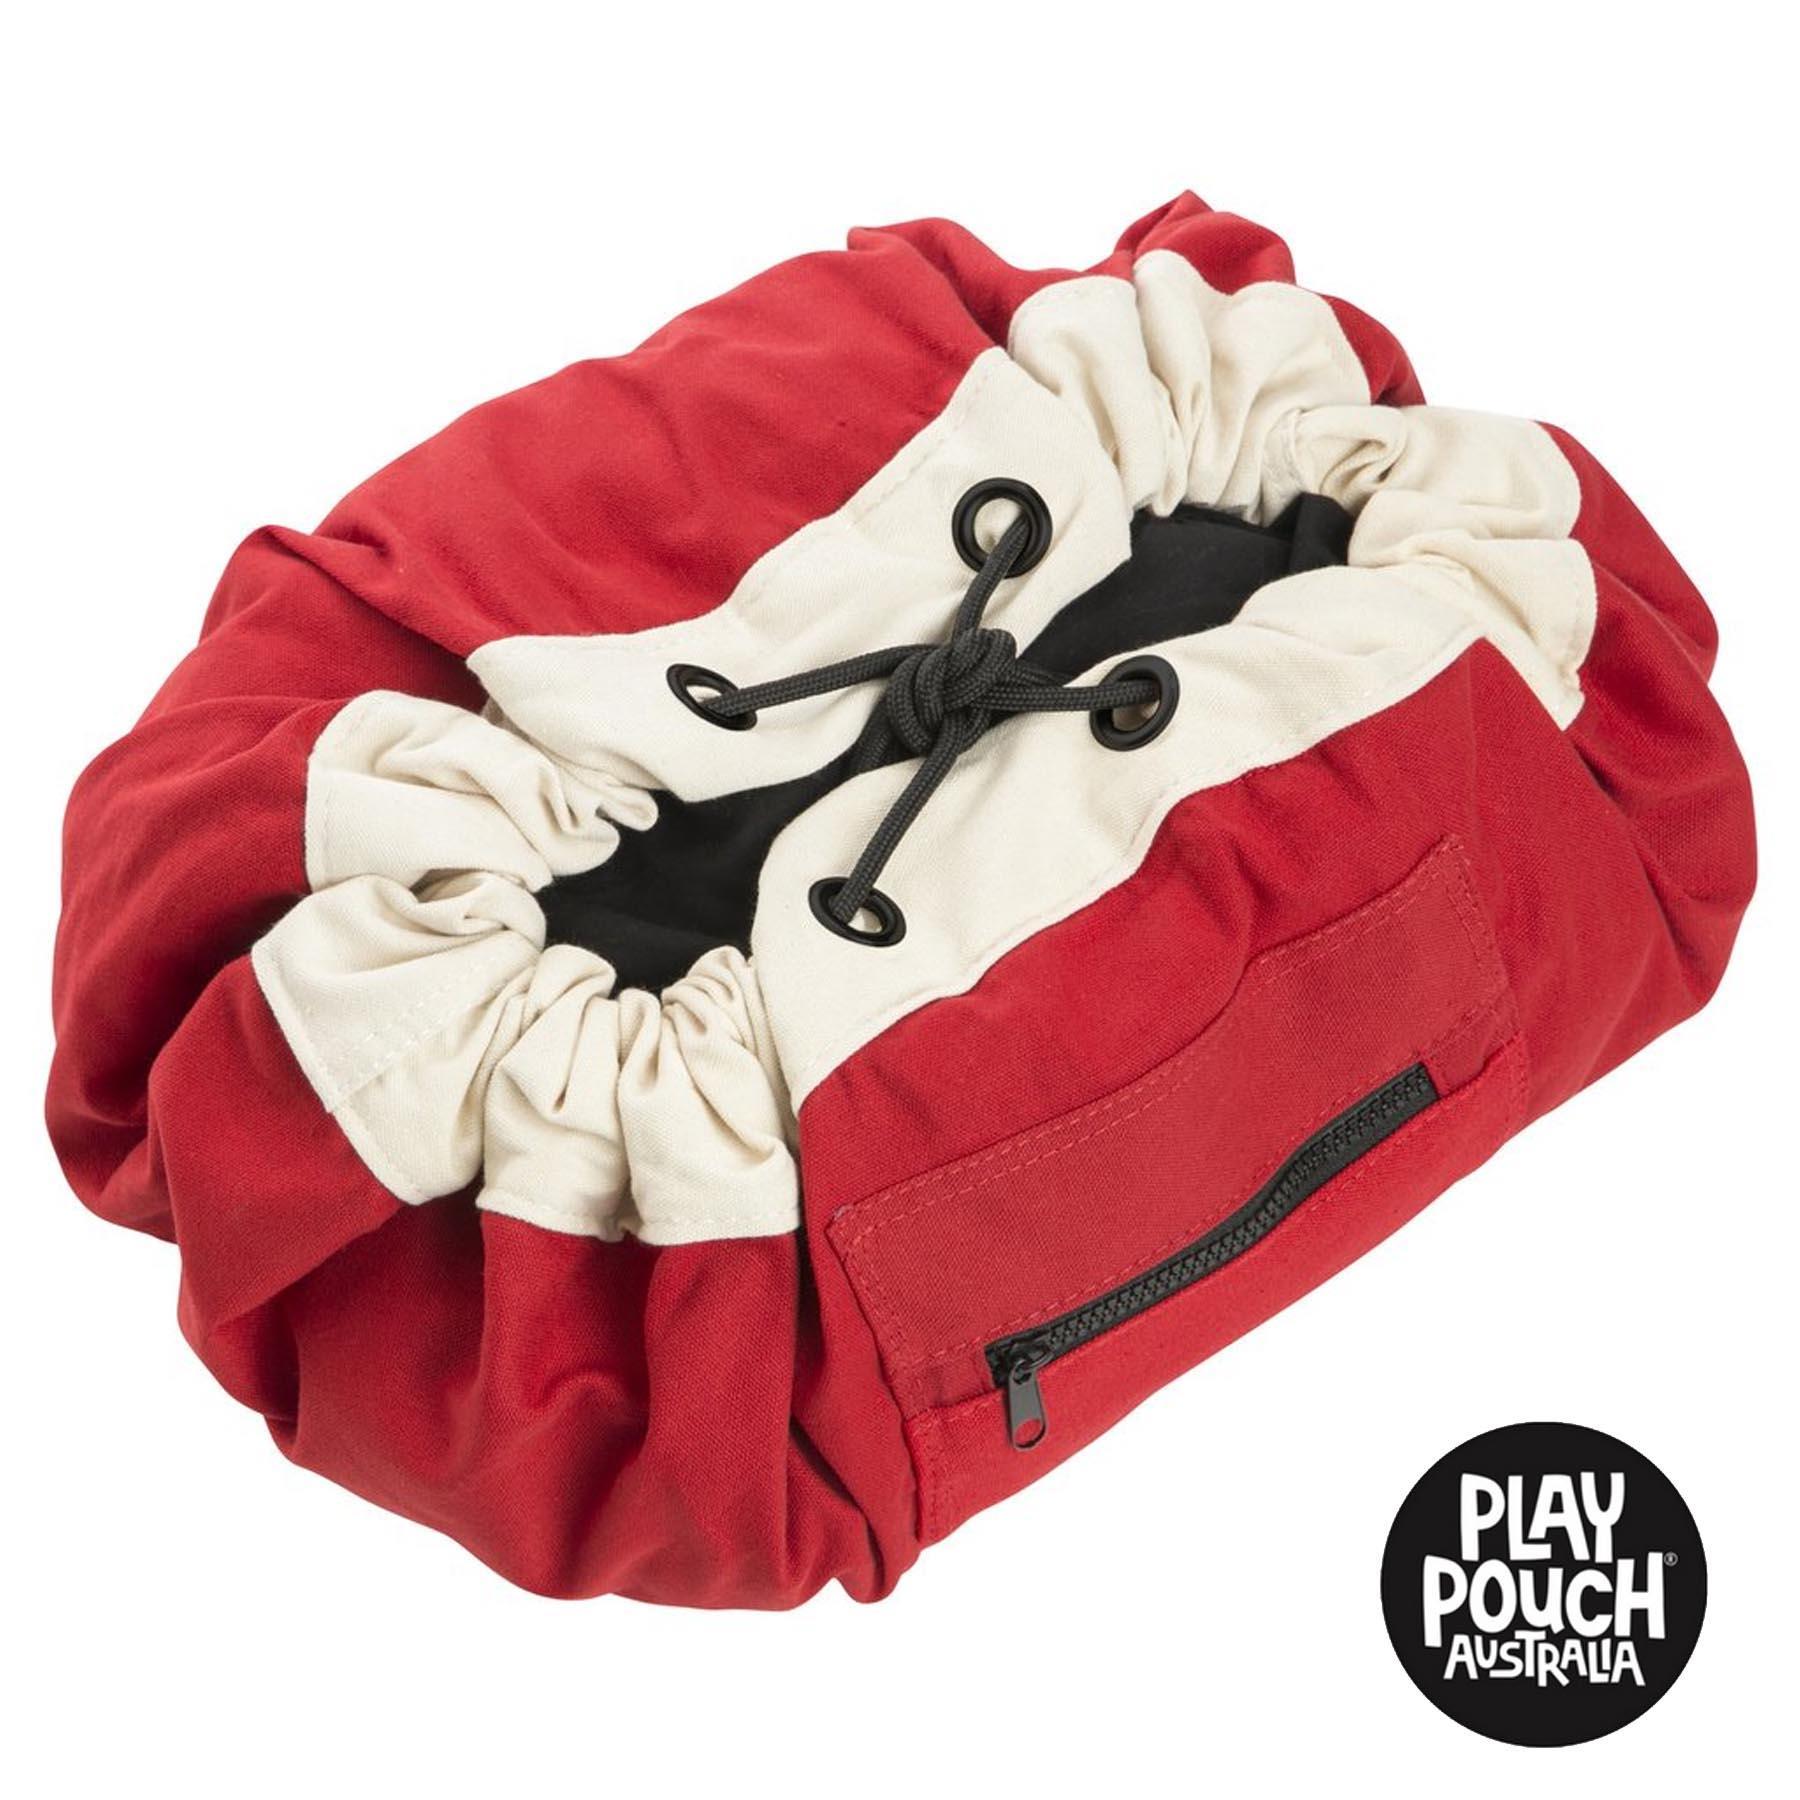 Play Pouch - Mini Rocket Red - Kids Toys Portable Storage Play Mat Bag - 65cm